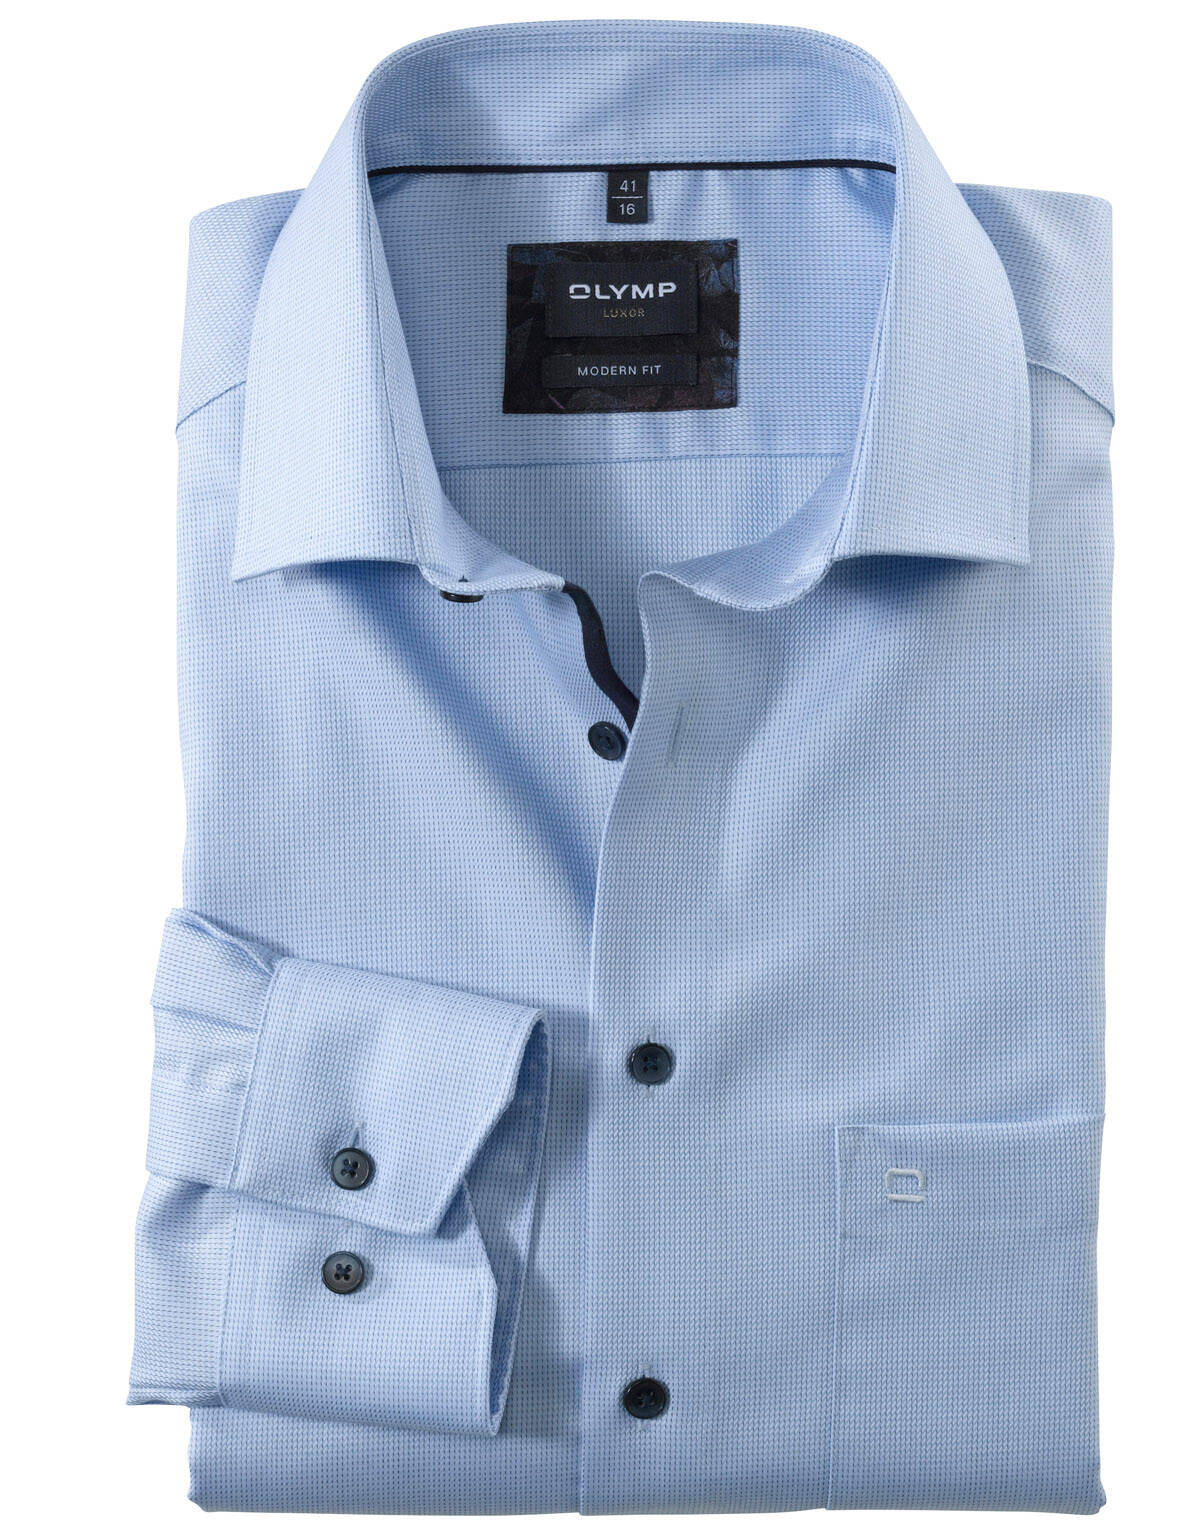 Рубашка голубая мужская OLYMP Luxor, modern fit[ГОЛУБОЙ]